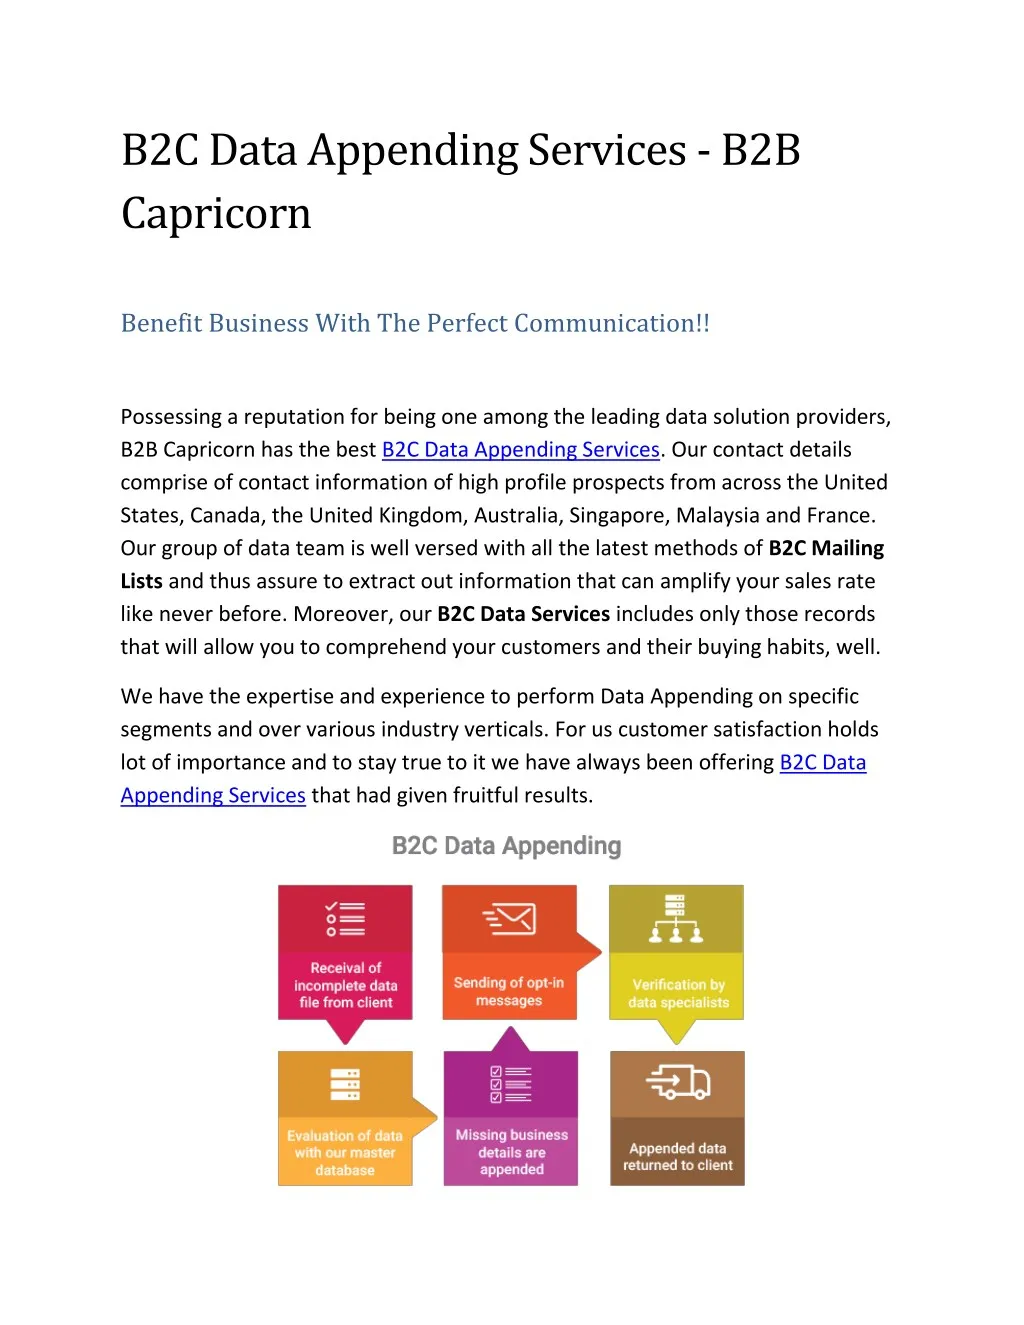 b2c data appending services b2b capricorn